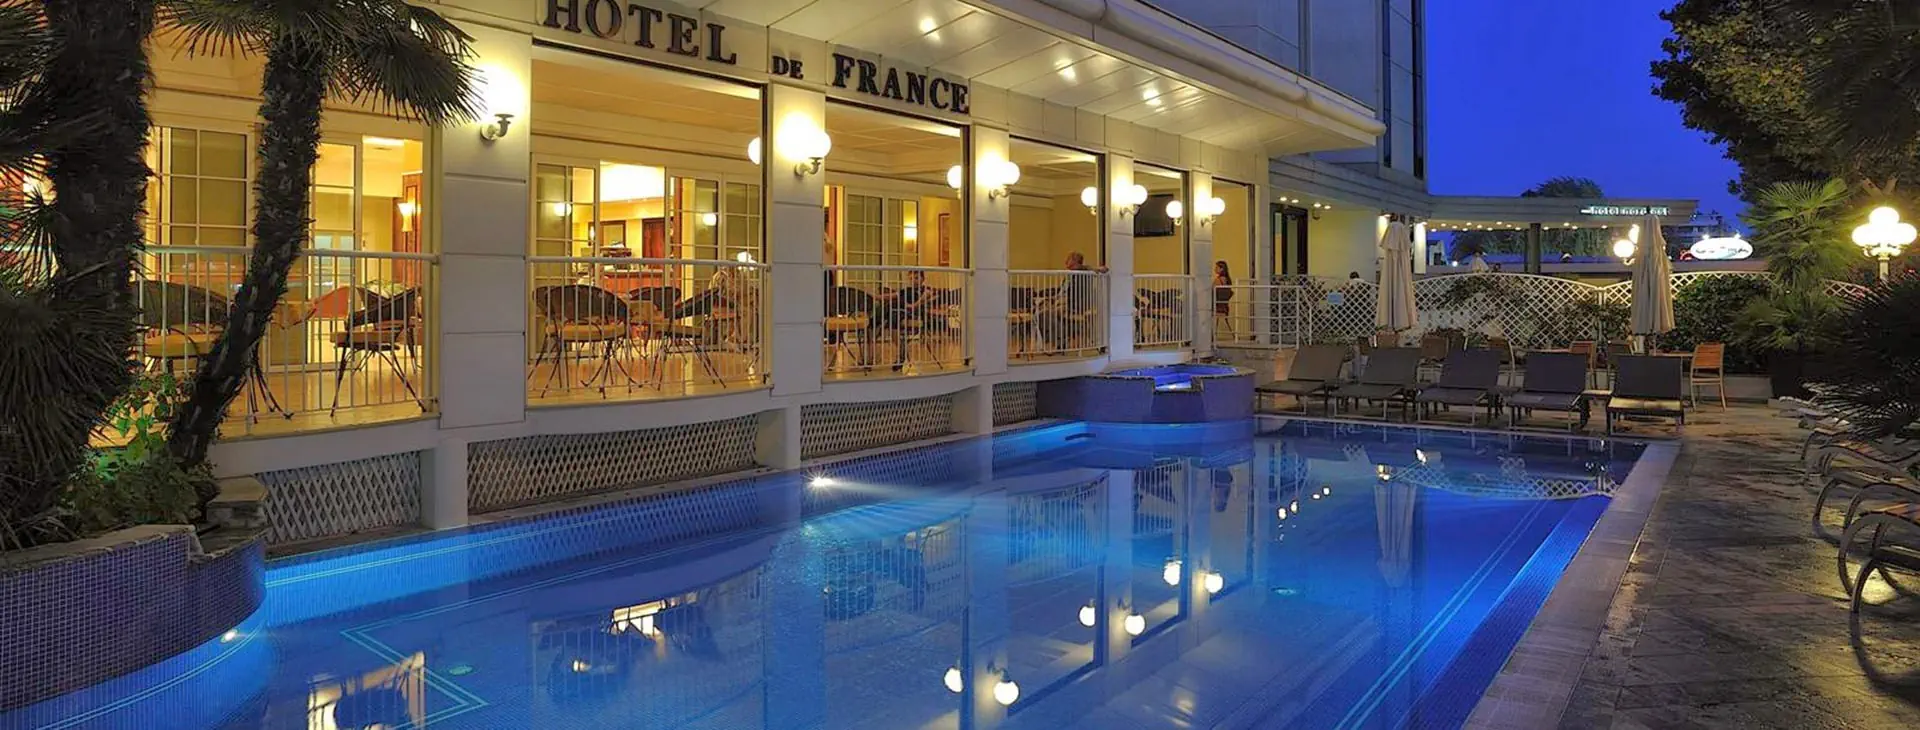 Włochy Riwiera Adriatycka Rimini De France Hotel